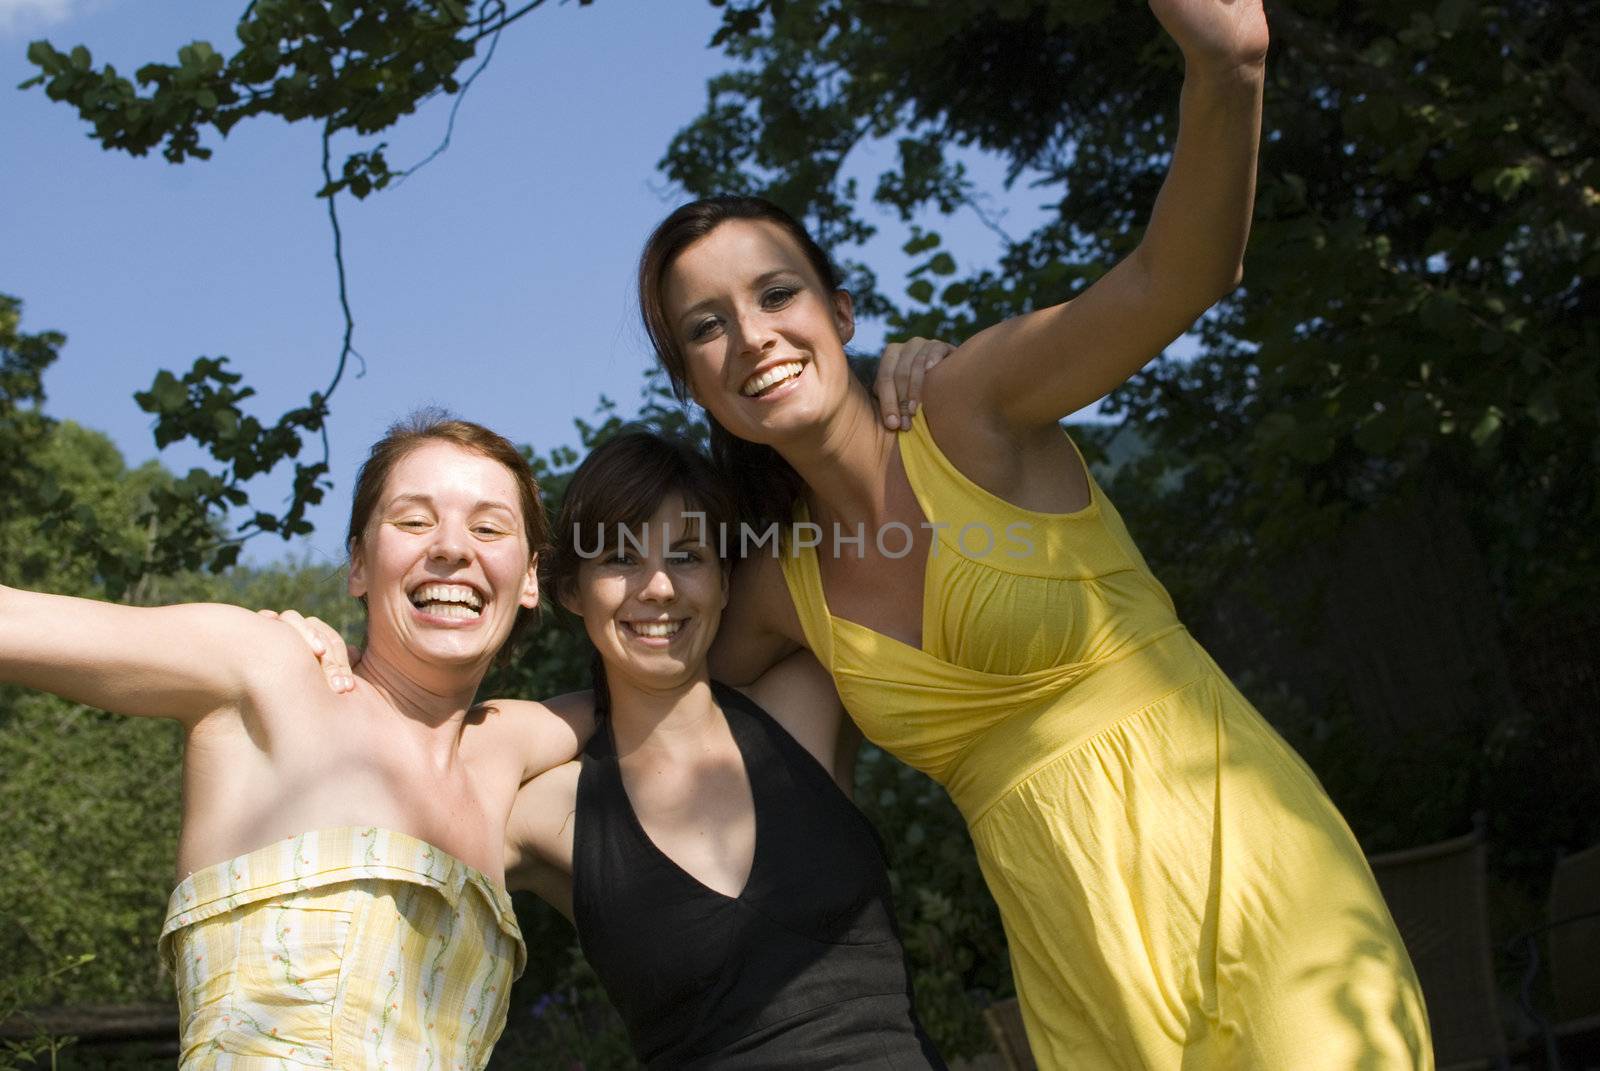 Girls having fun by fahrner